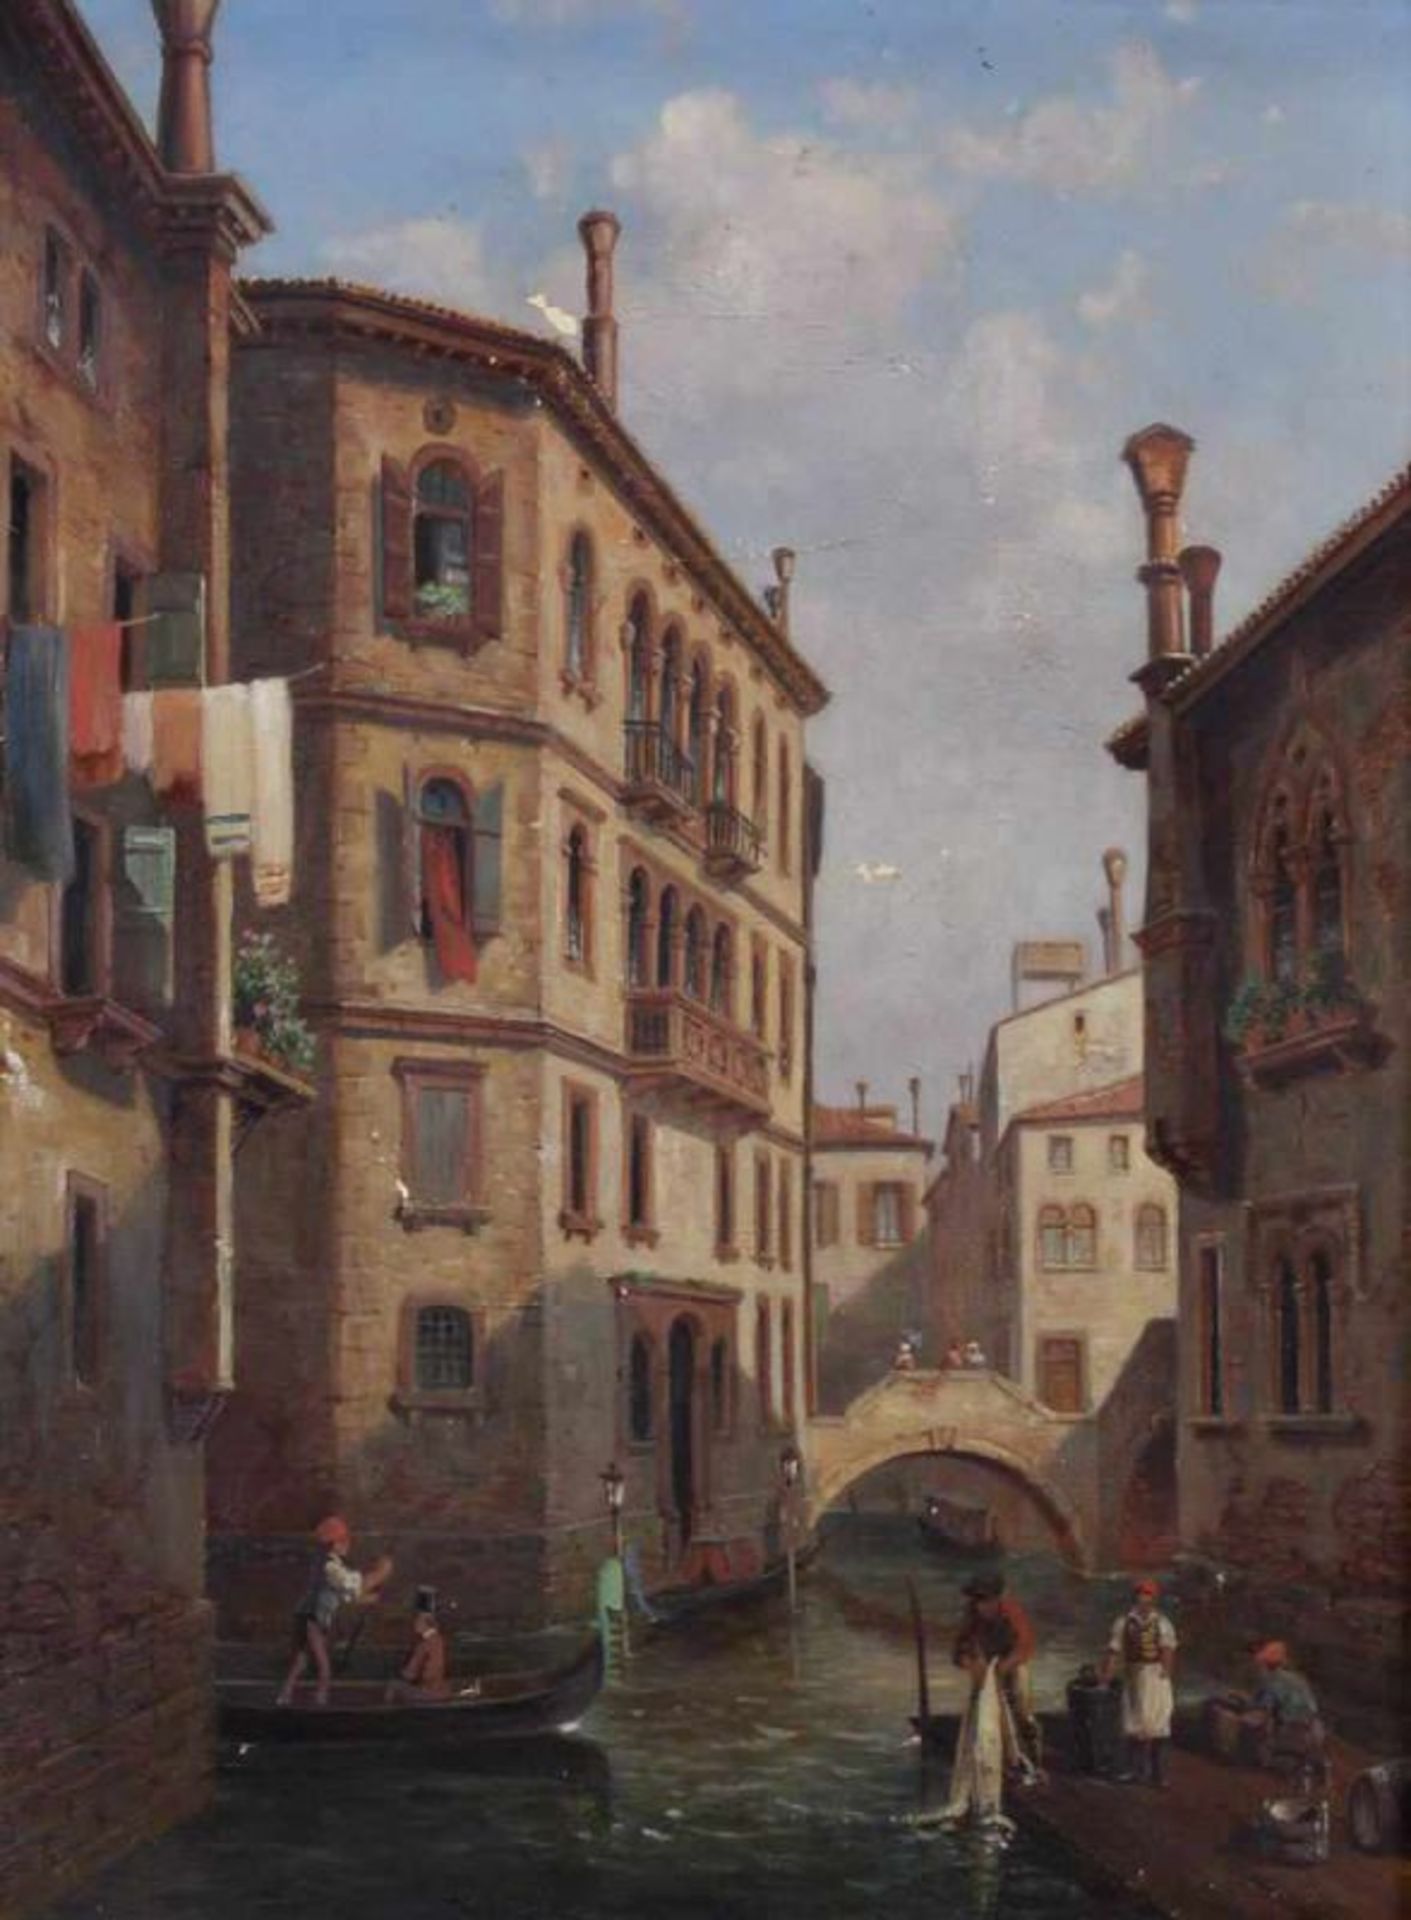 Unbekannter Maler (19./20. Jh.), "Casa di Bianca Cappello, Venedig", Öl auf Leinwand, verso